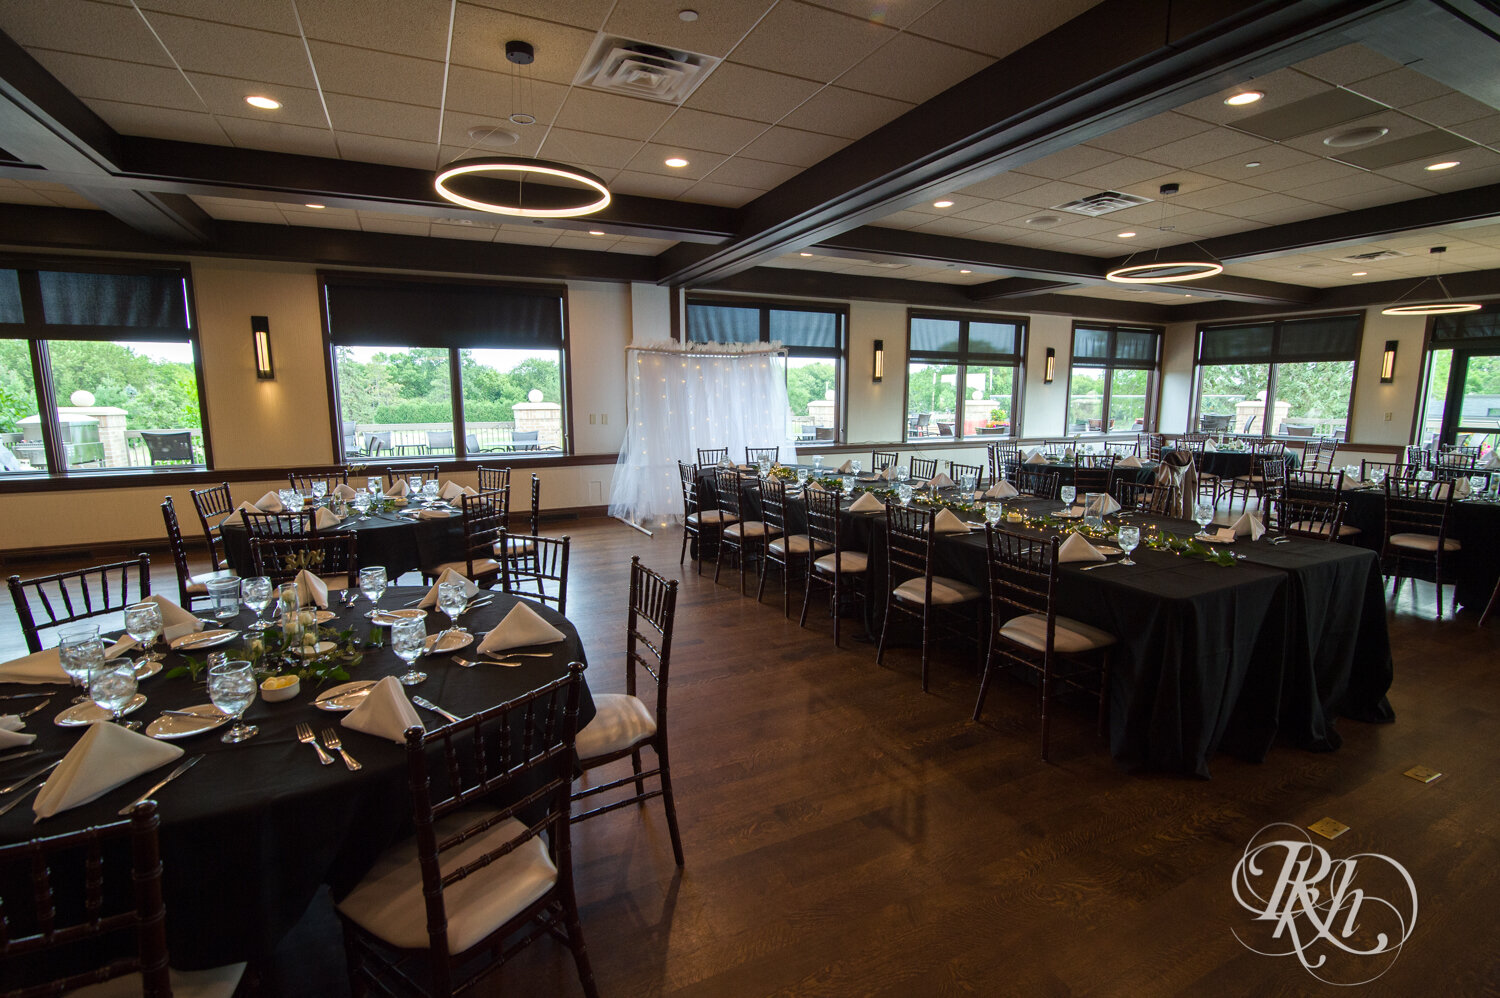 Indoor fall wedding reception setup at Olympic Hills Golf Club in Eden Prairie, Minnesota.